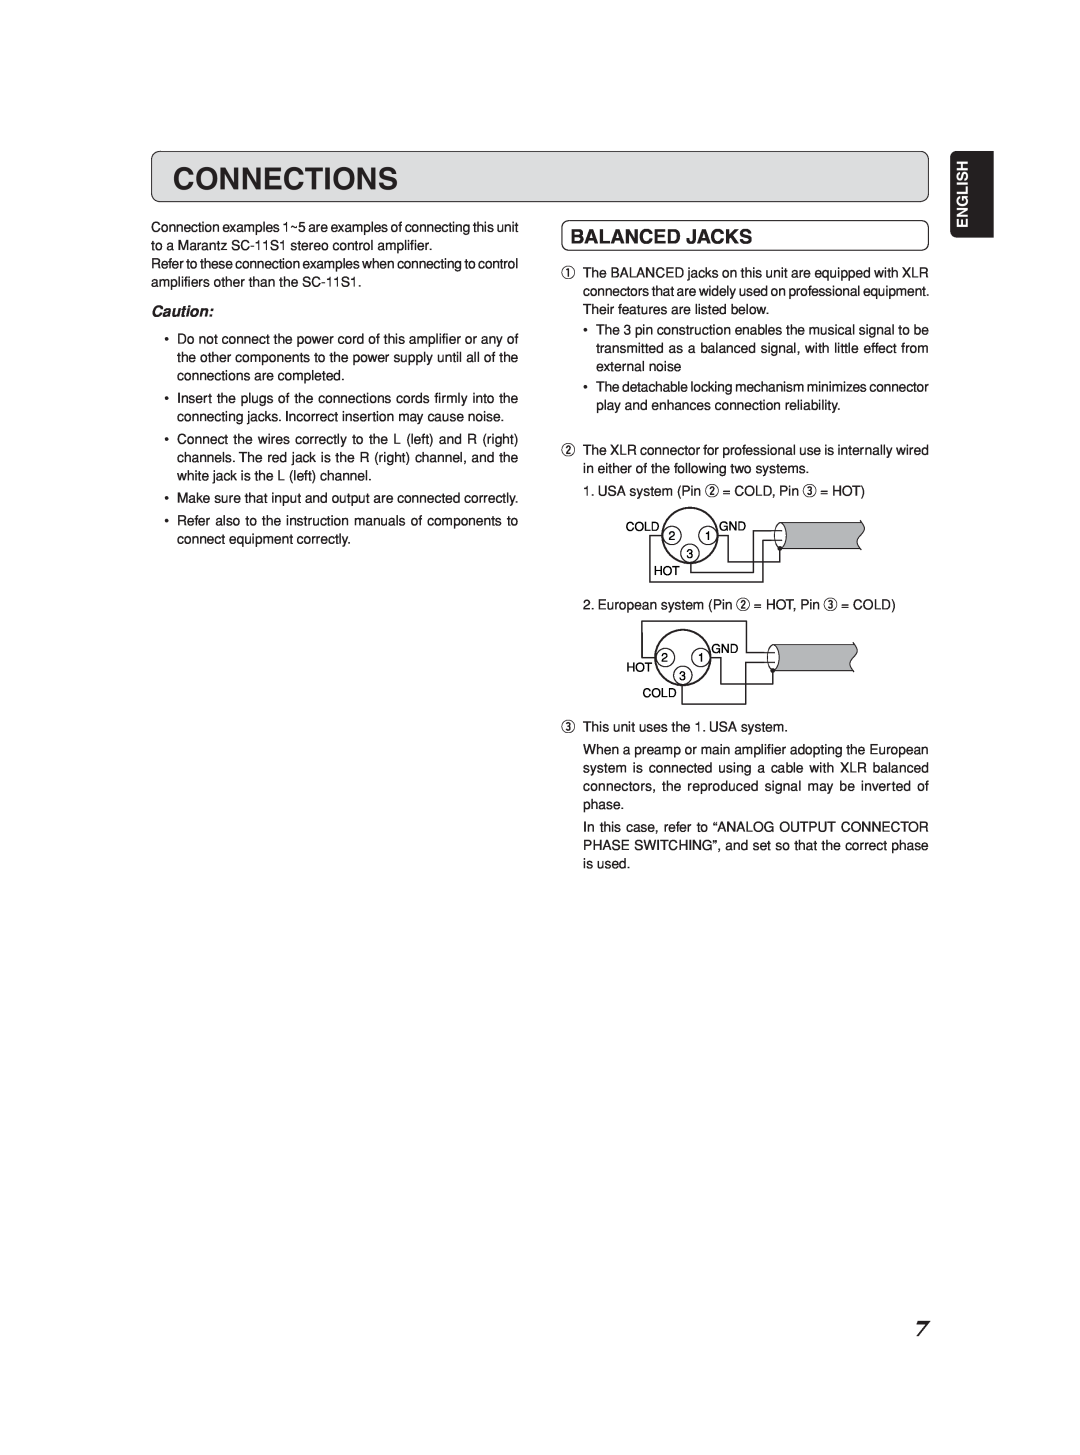 Marantz SM-1151 manual Connections, Balanced Jacks, English 